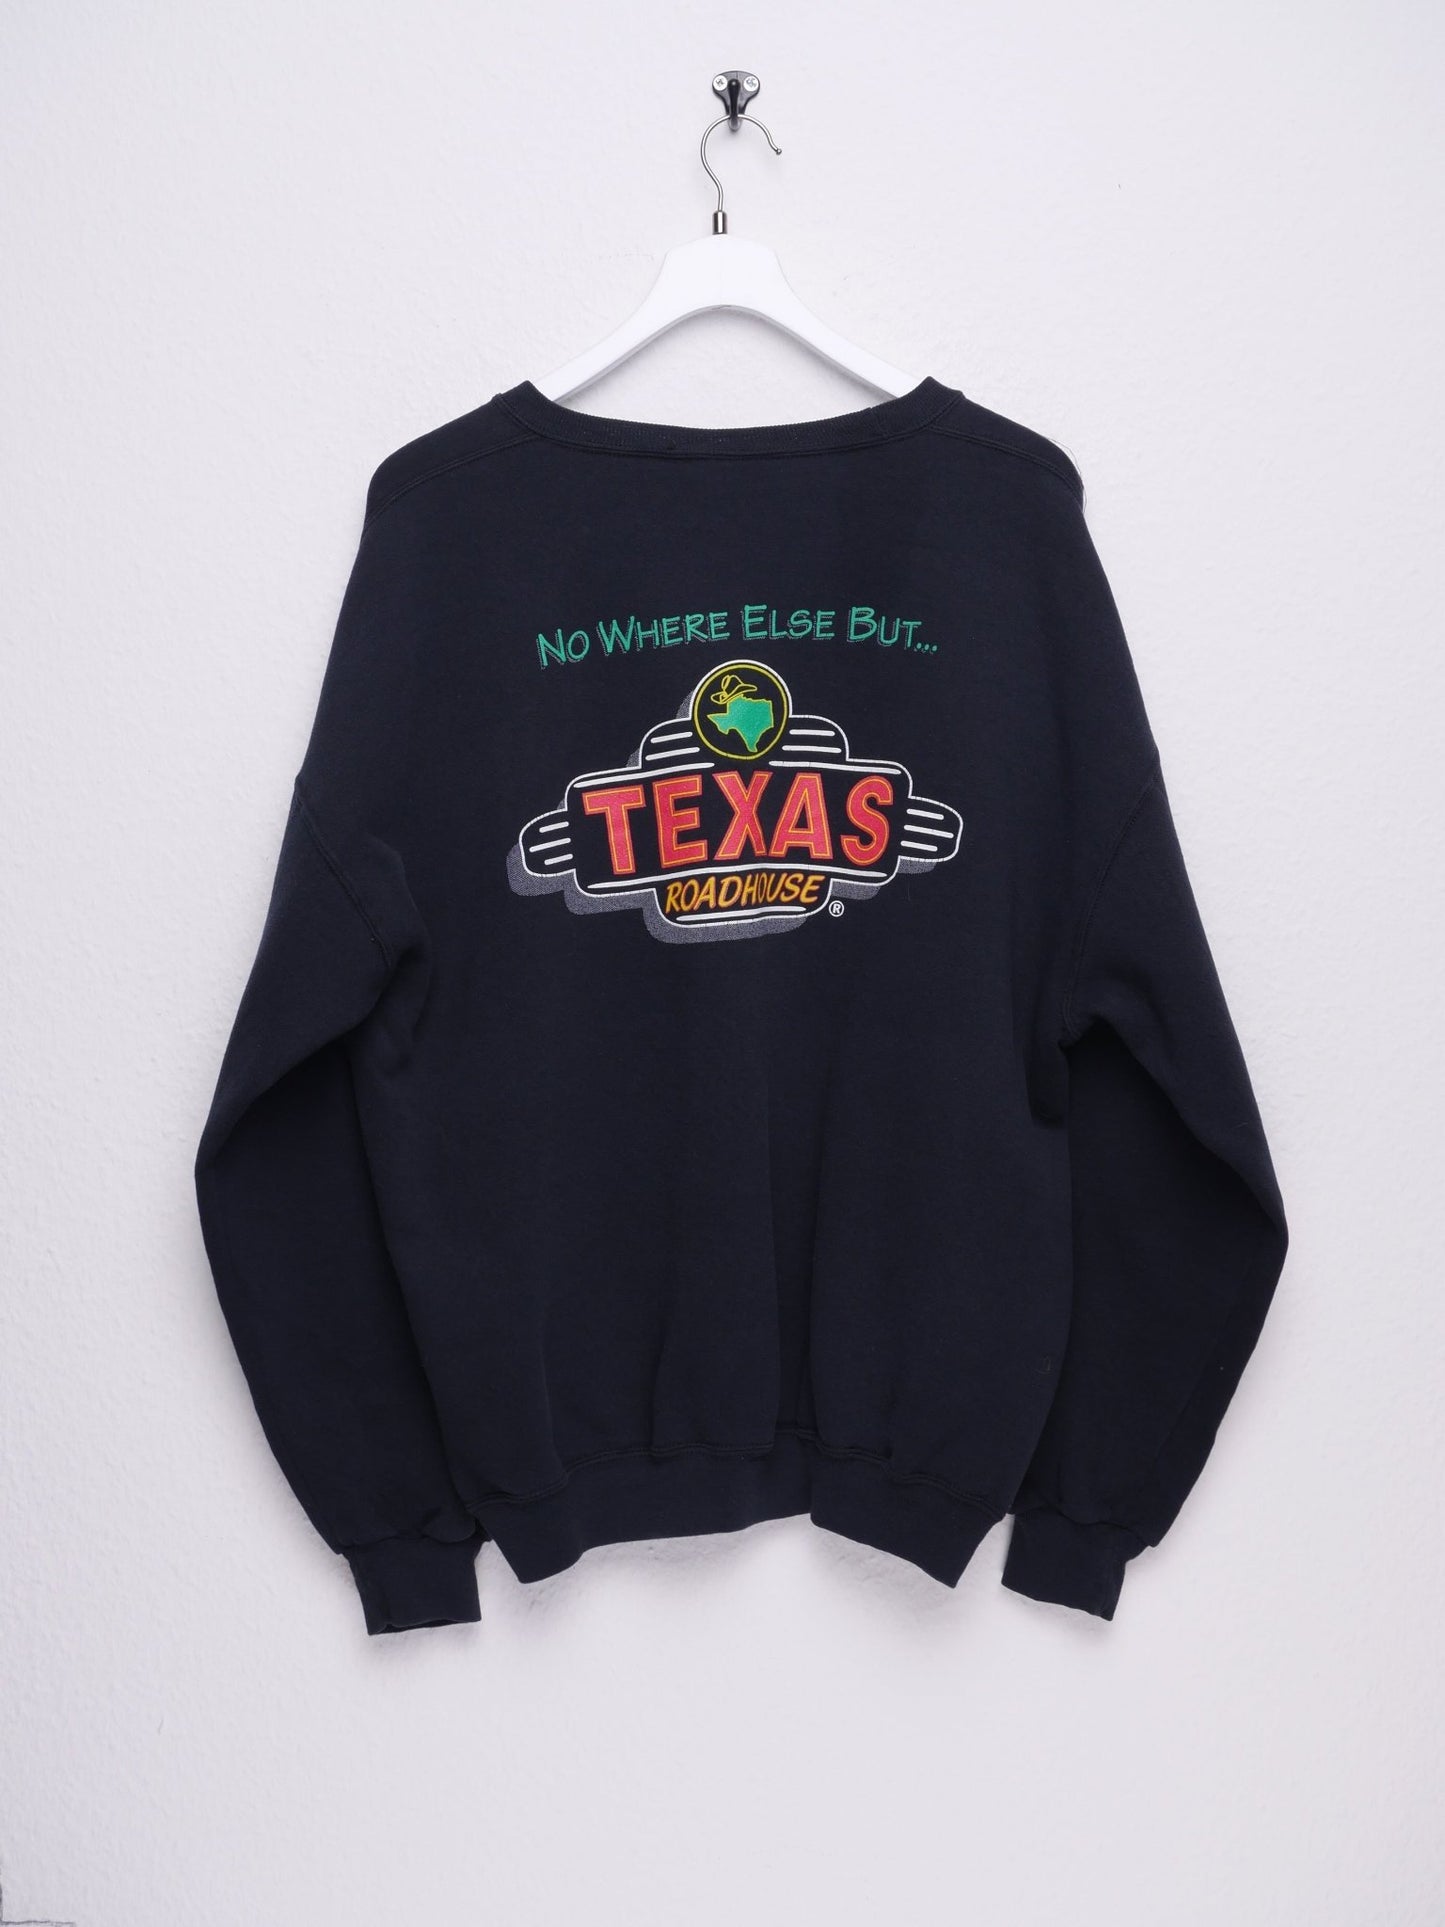 Texas Roadhouse printed Logo black Sweater - Peeces